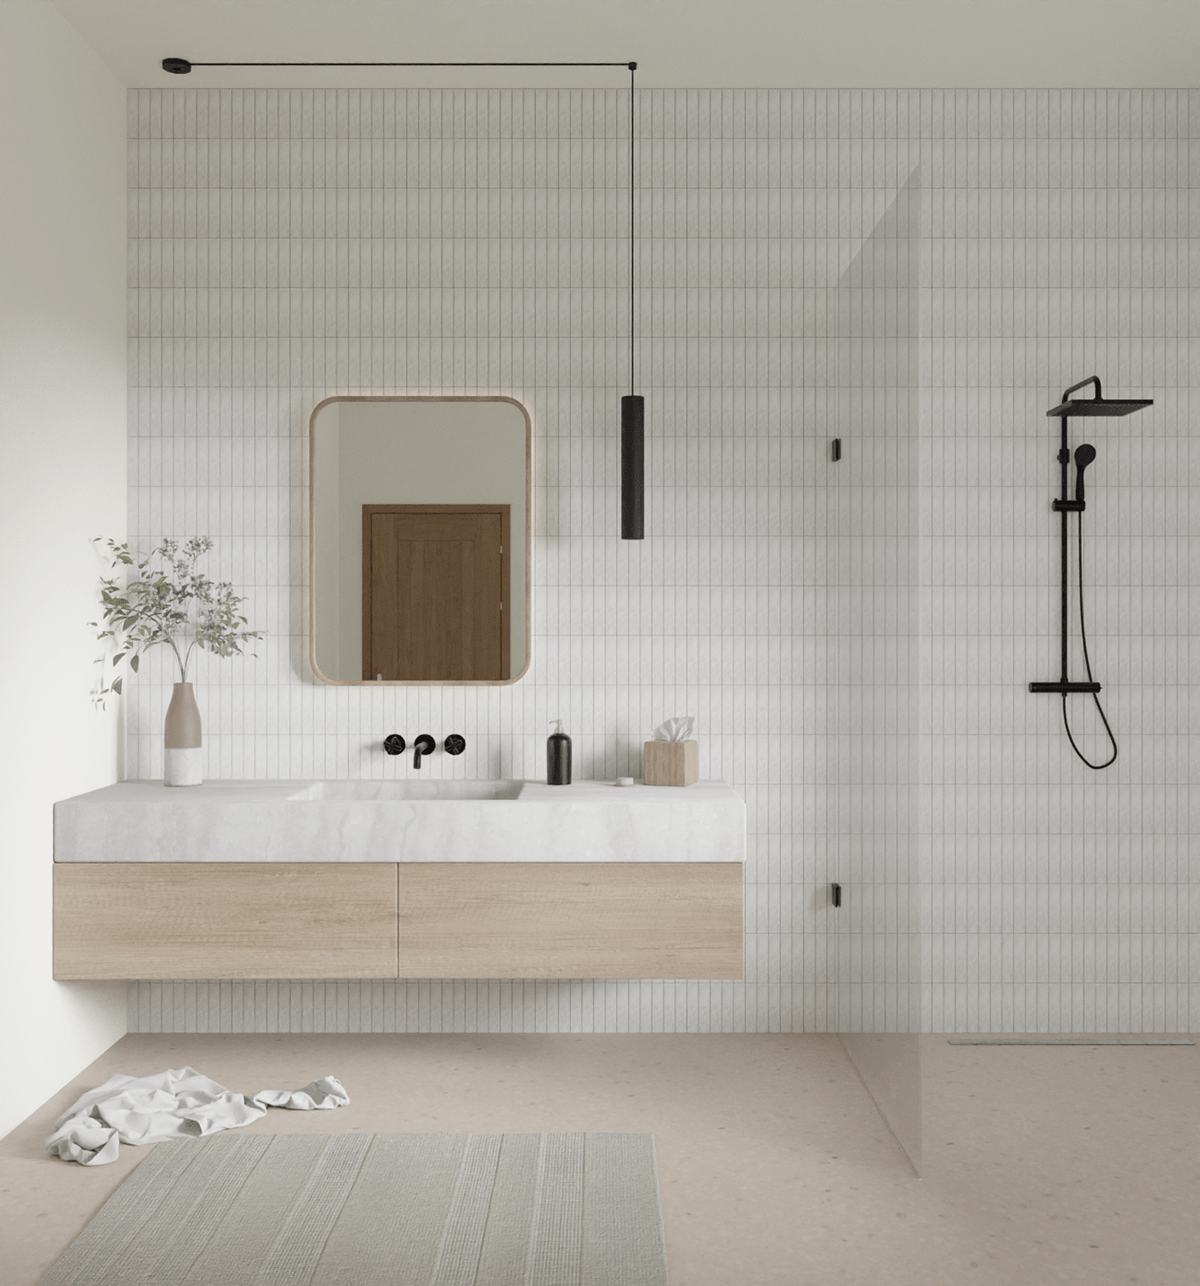 3drendering architecture bathroom blender CGI interiordesign visualisation